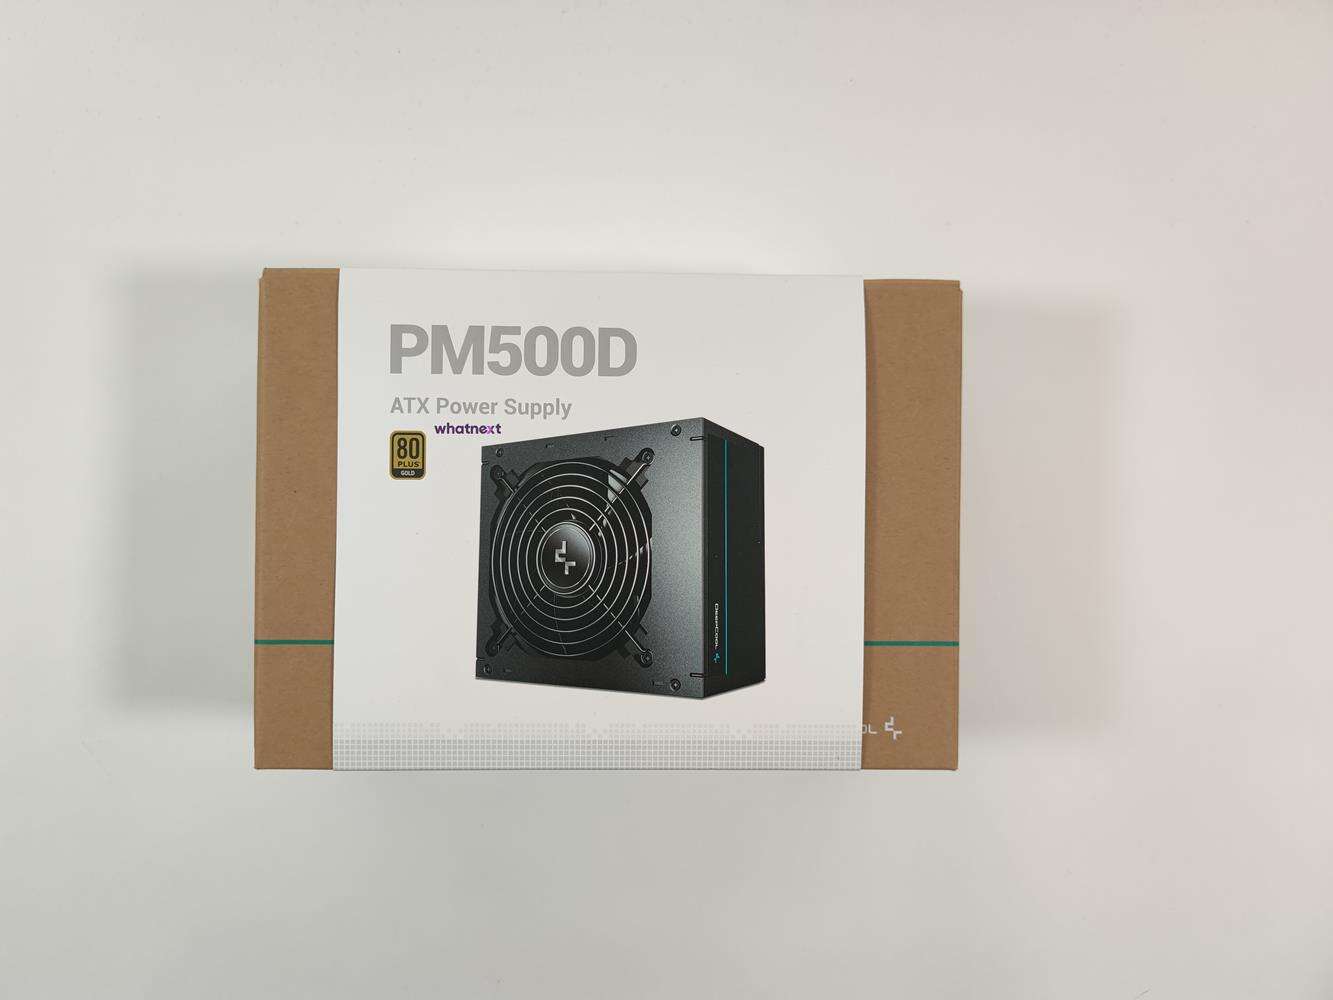 test Deepcool PM500D, recenzja Deepcool PM500D, opinia Deepcool PM500D